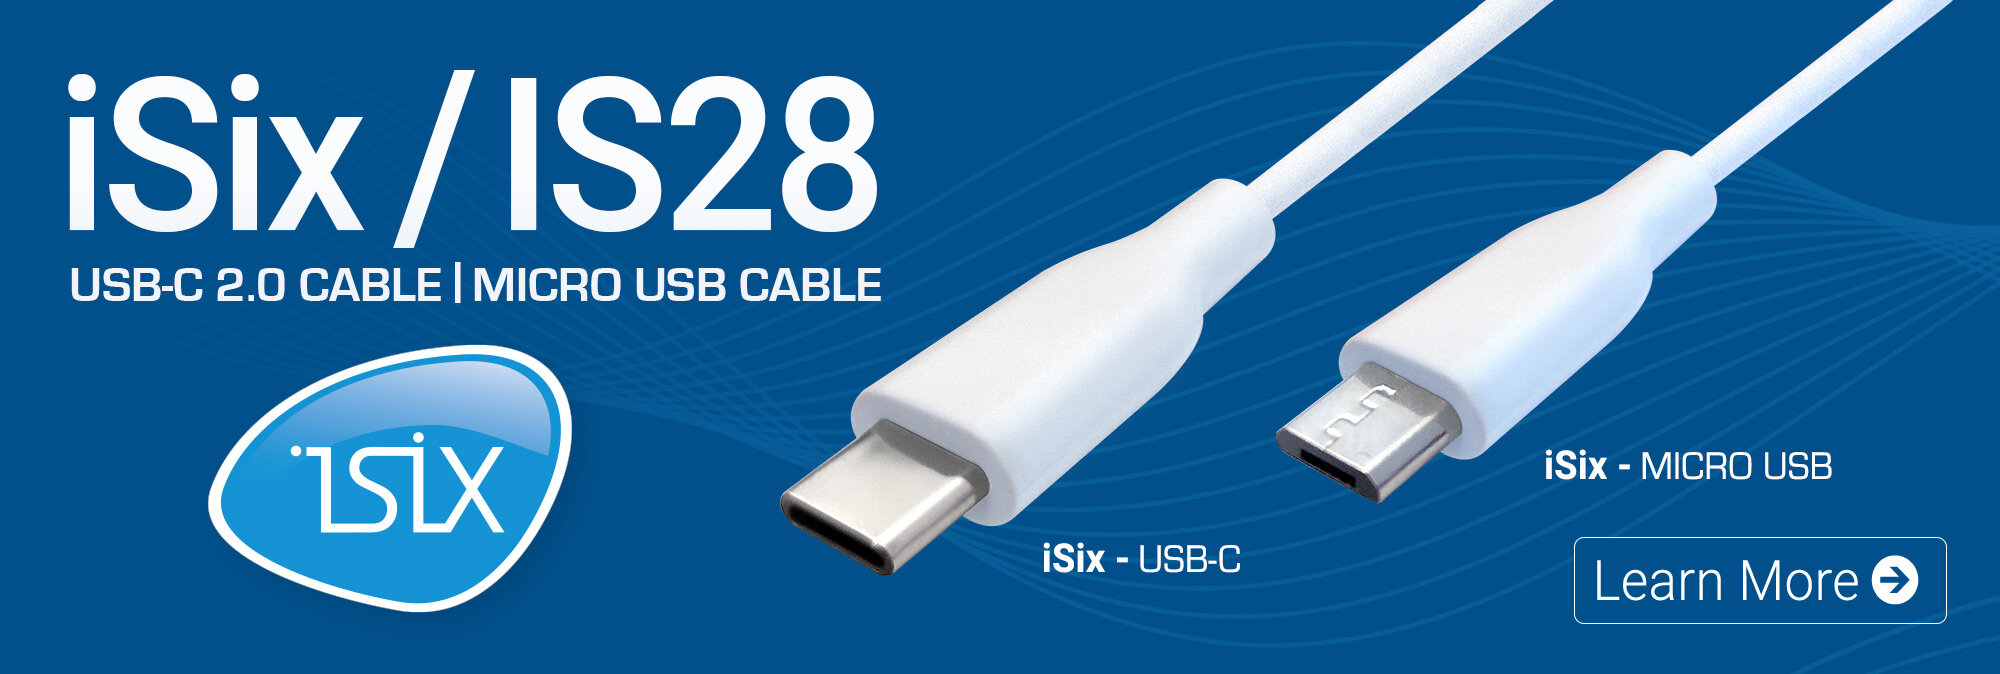 USB-C_Micro-USB_Web_Banner_2020.jpg